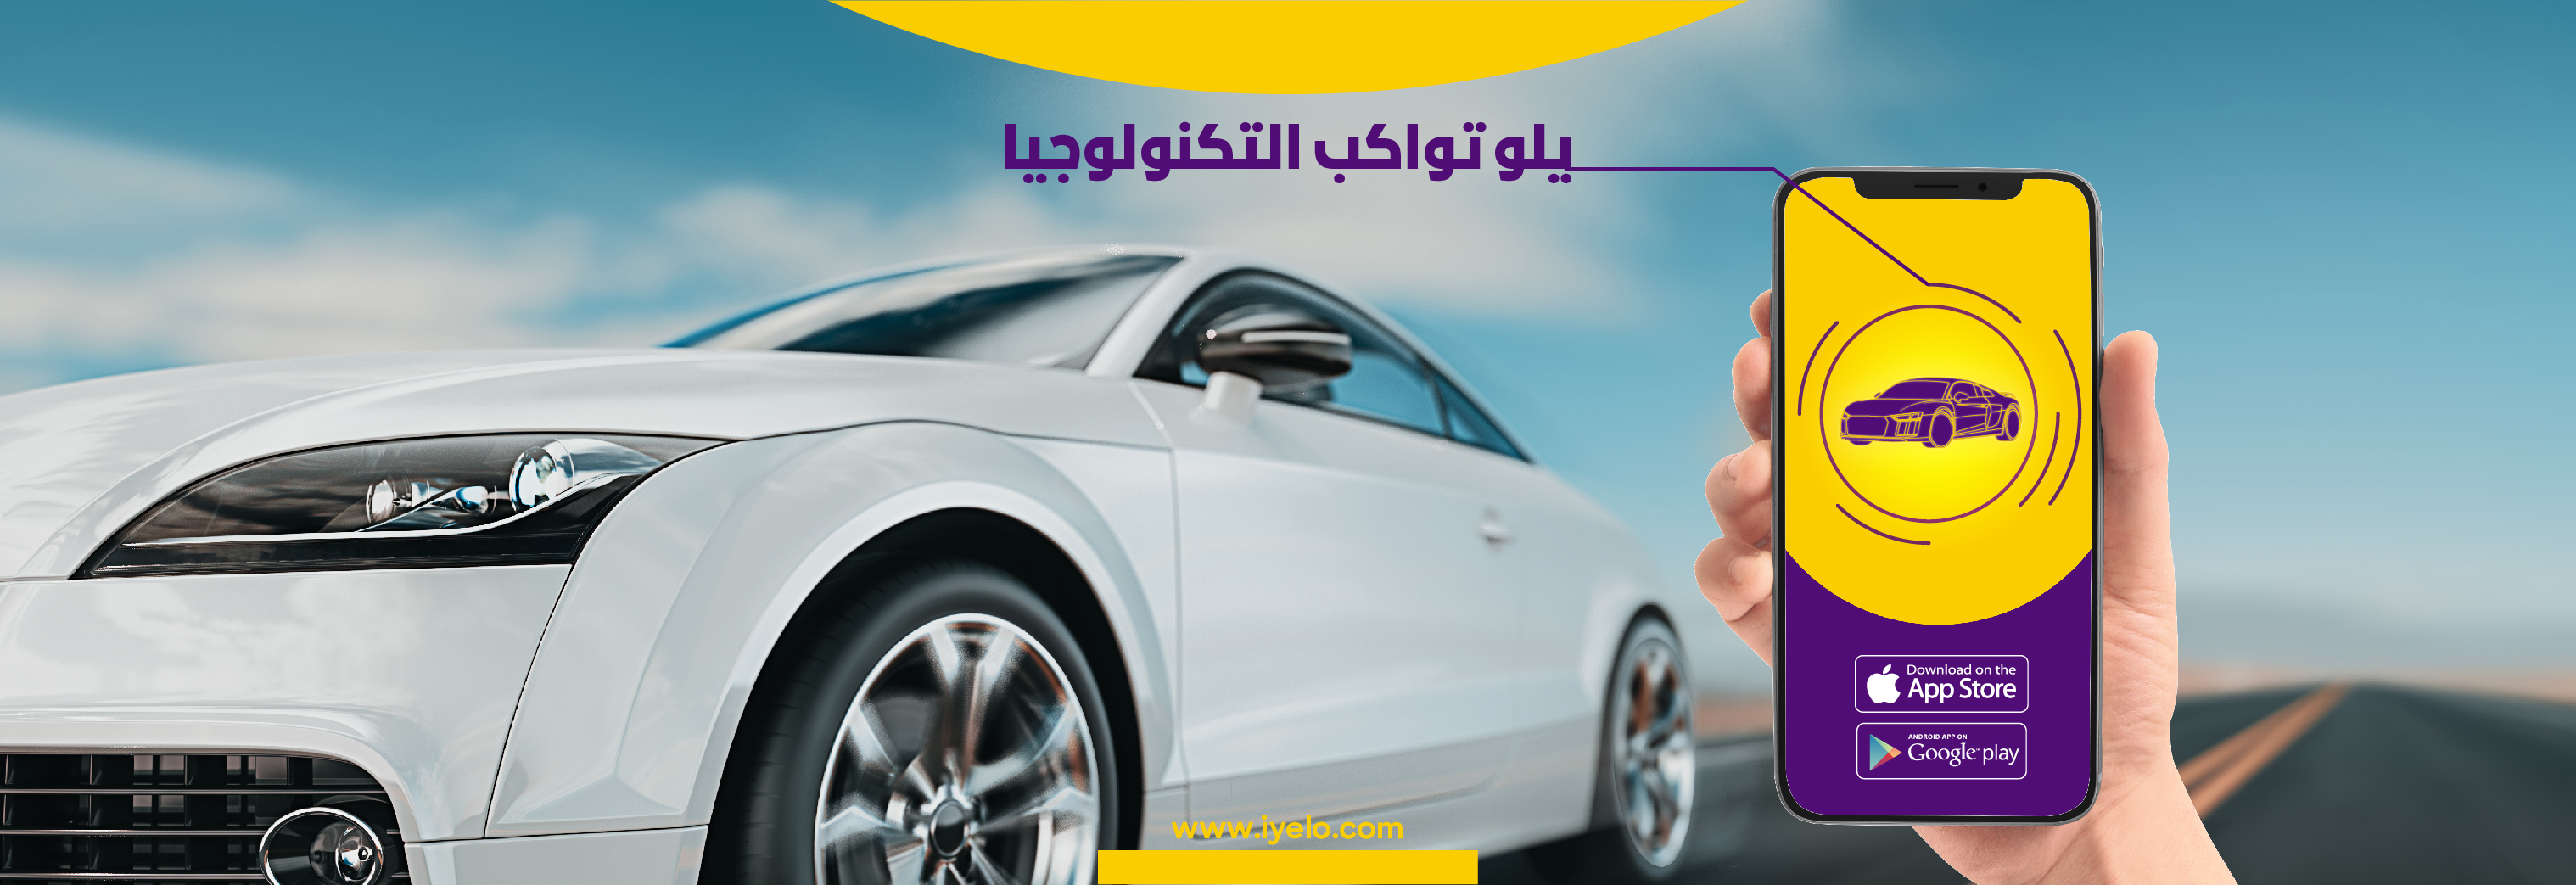 Rent a car in riyadh, jeddah and all over Saudi Arabia - Yelo